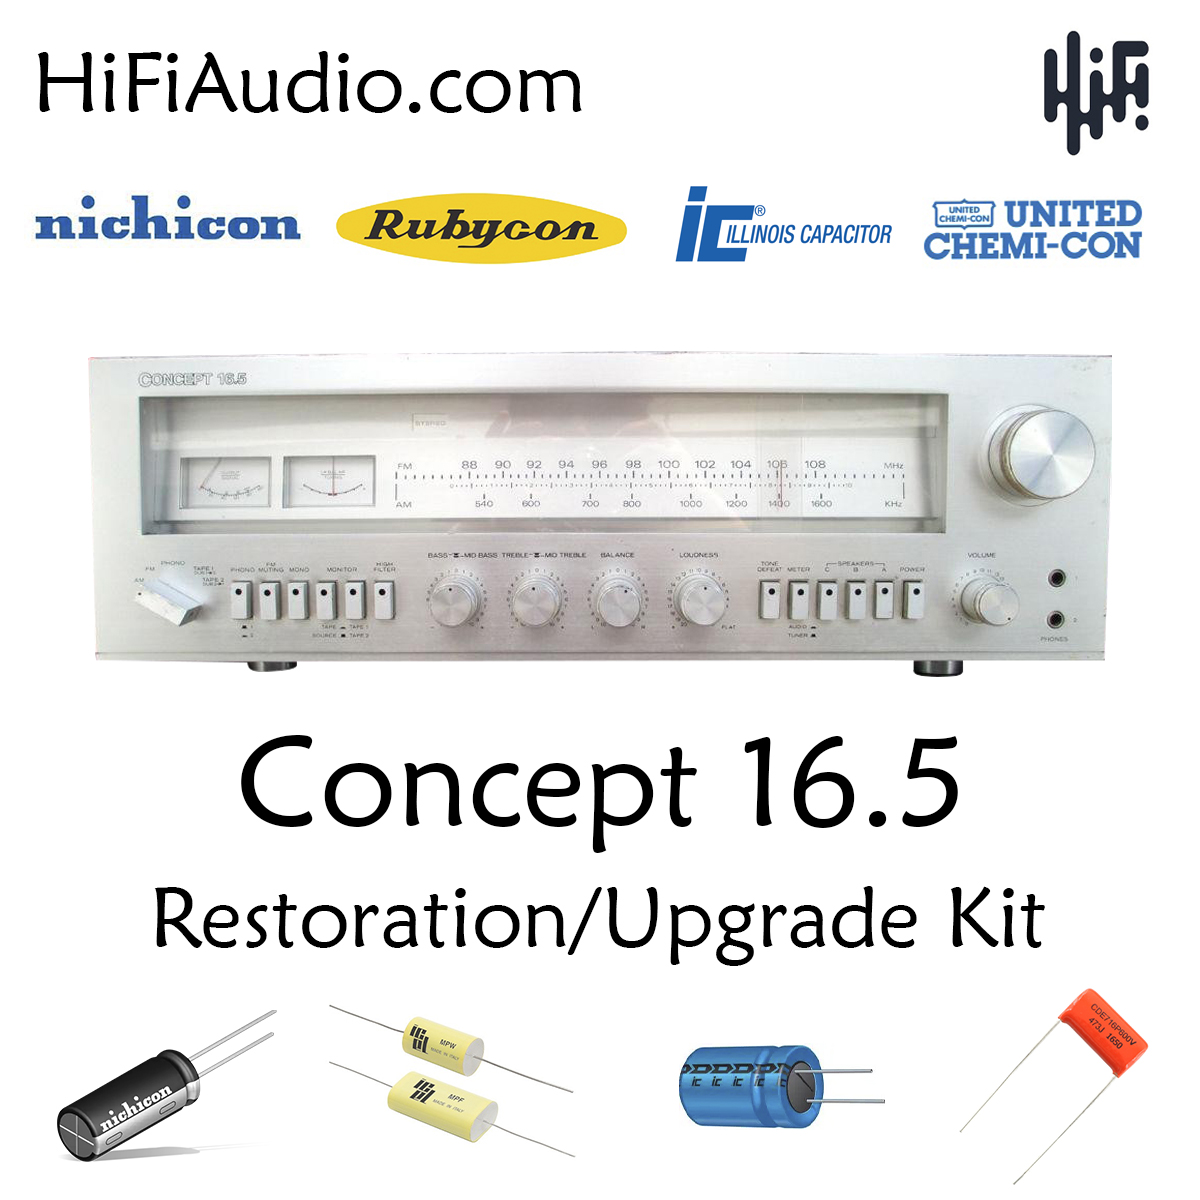 Concept 16.5 restoration kit